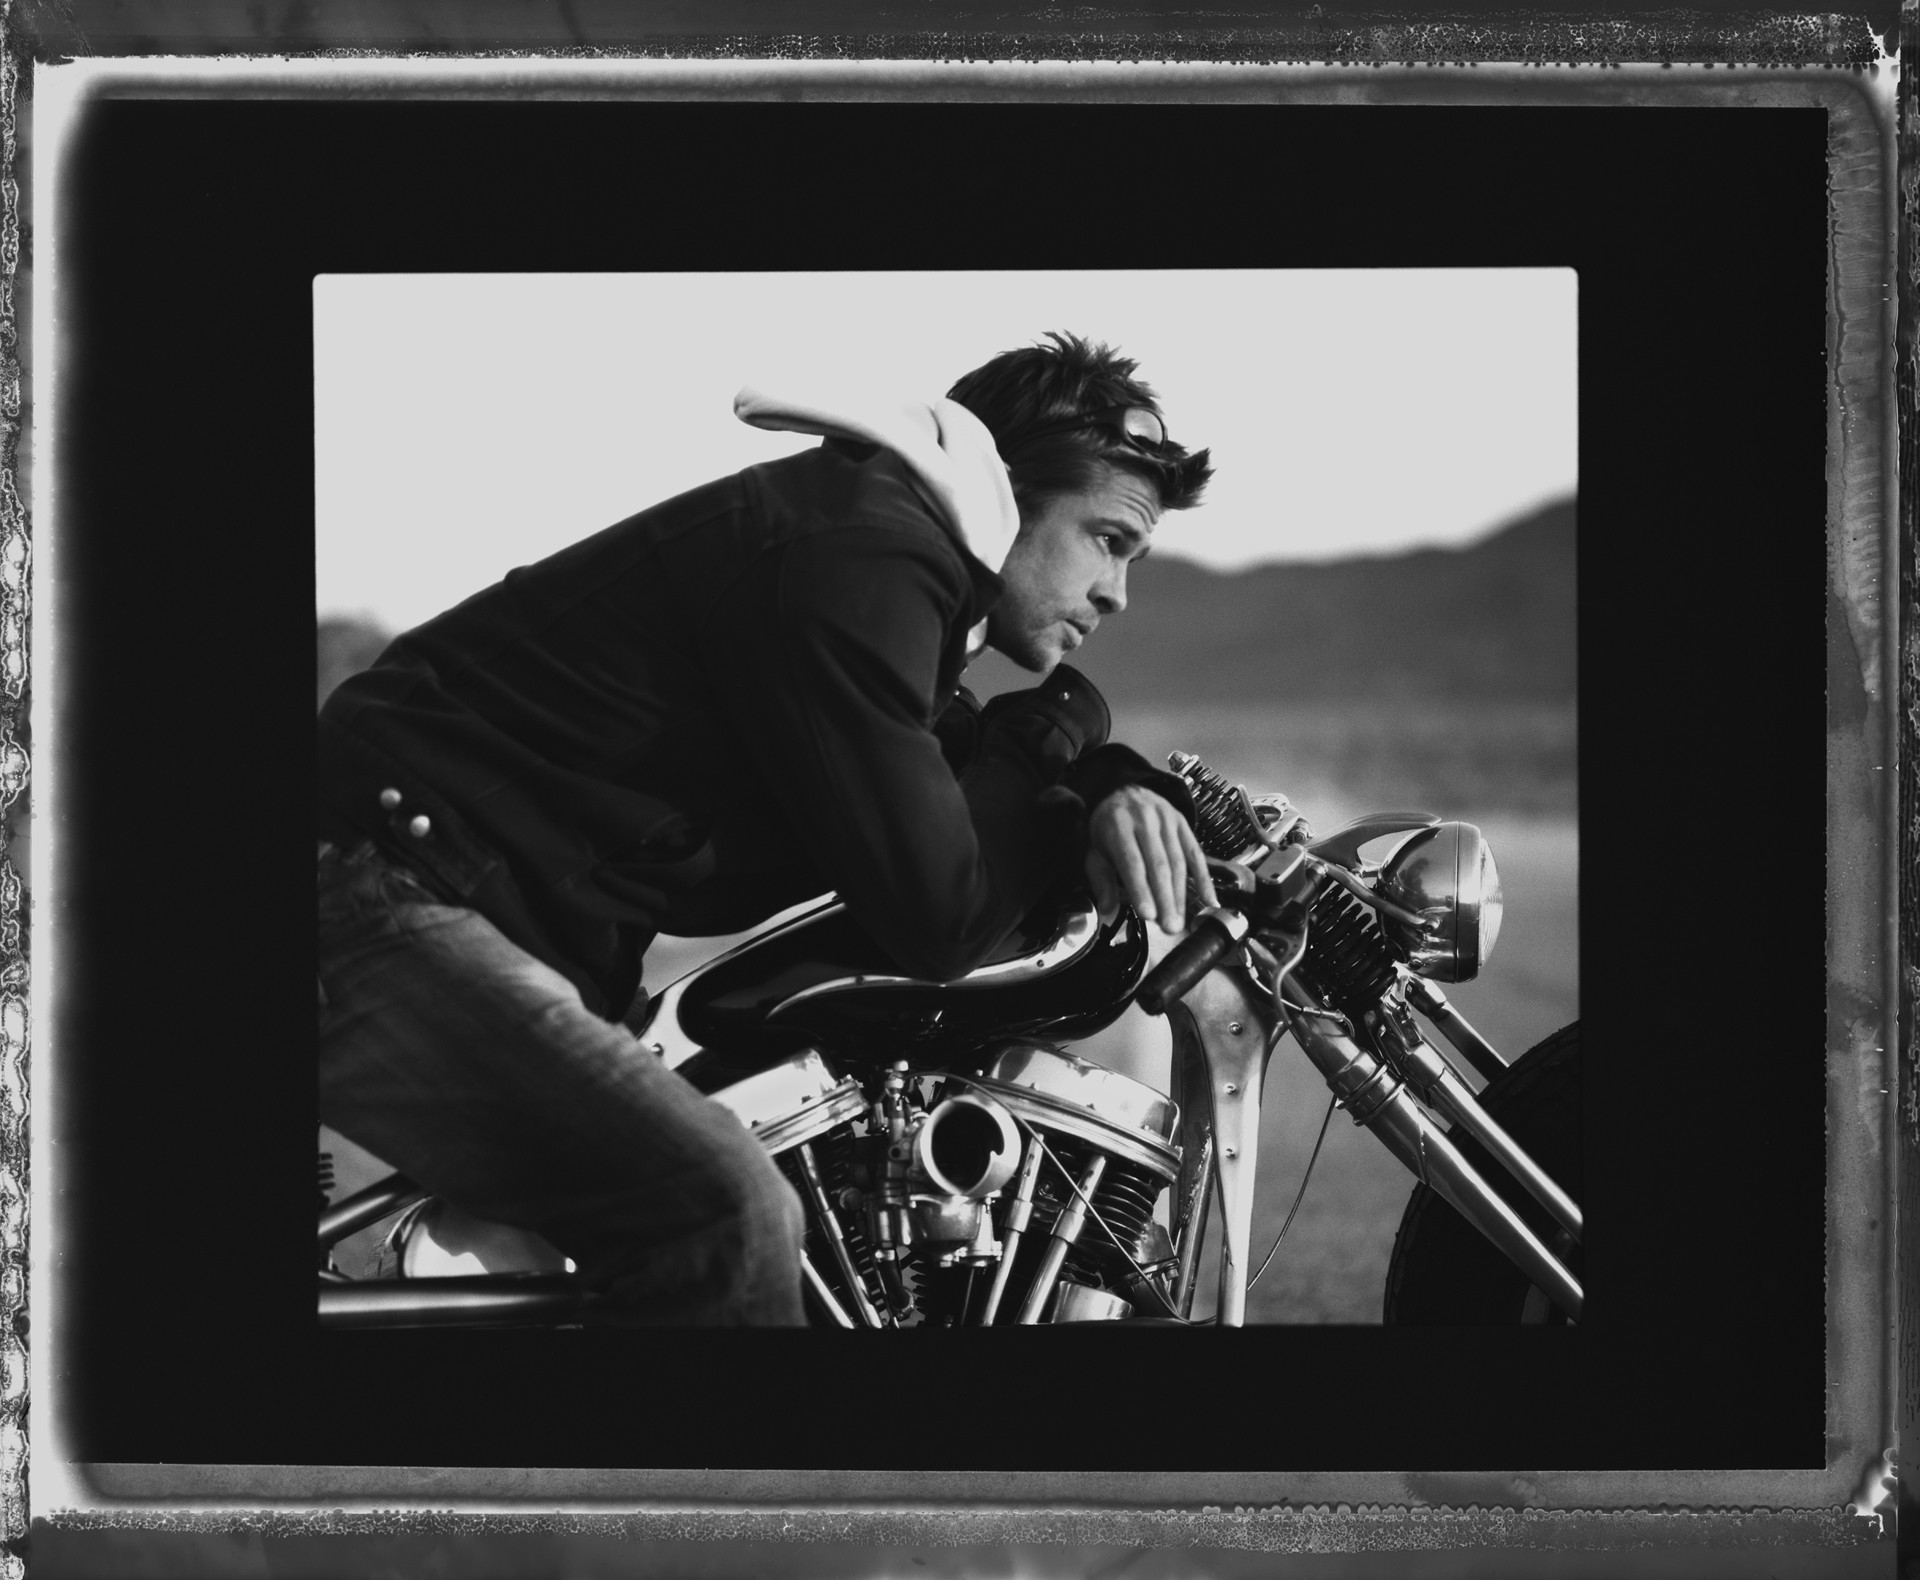 05009 Brad Pitt on Motorcycle BW by Timothy White